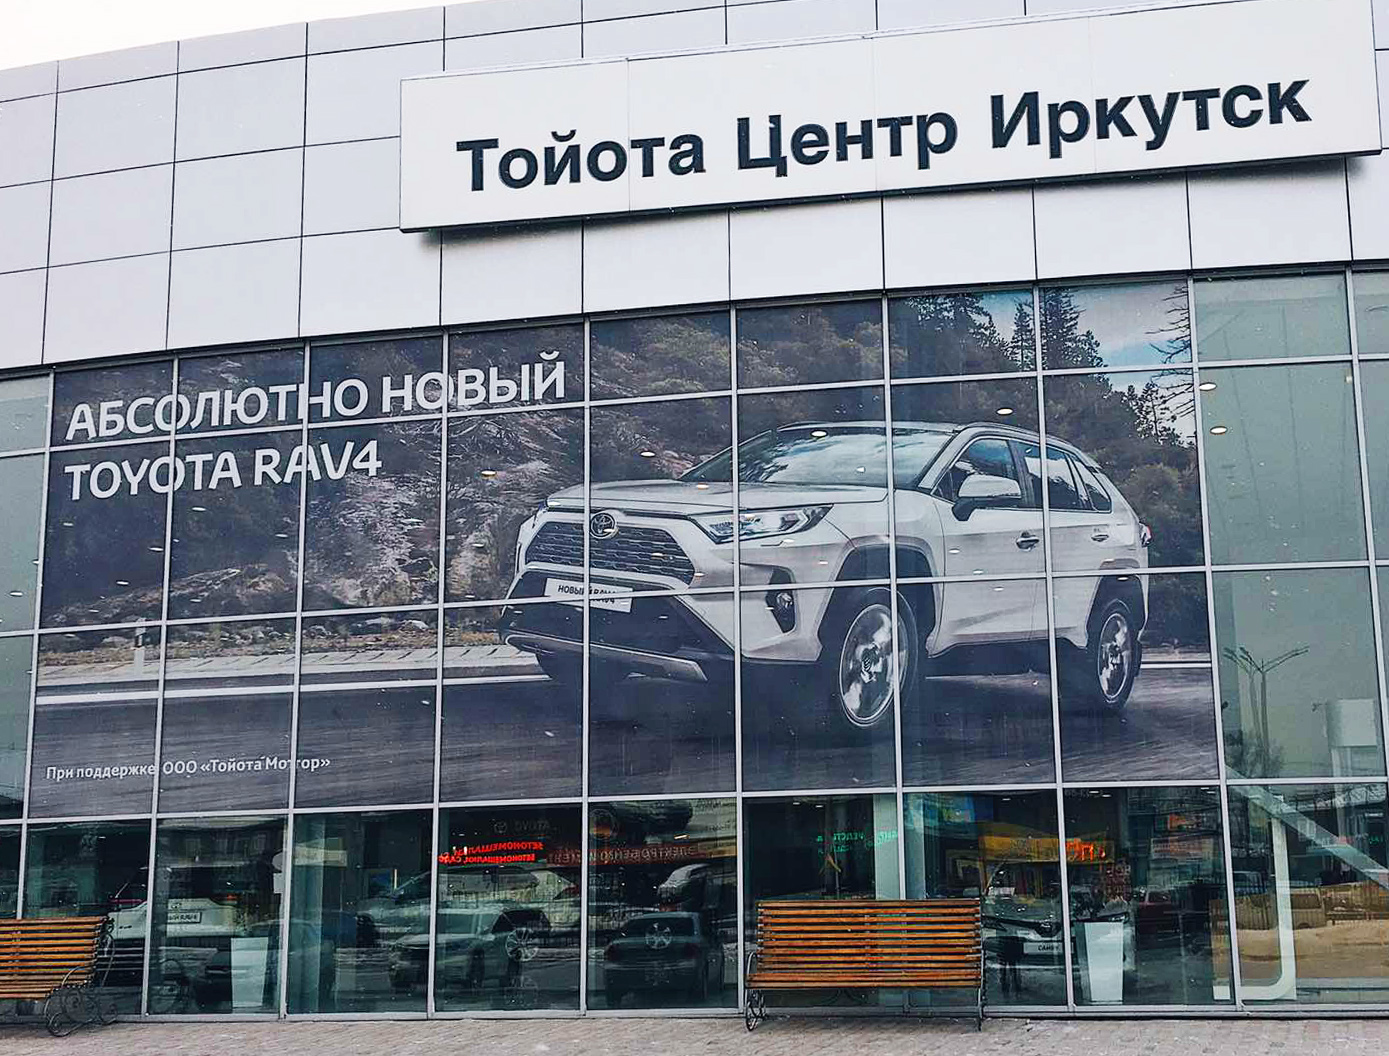 Продажа авто тойота центр иркутск. Тойота центр Иркутск. Лексус Иркутск. Тойота центр Иркутск сотрудники.